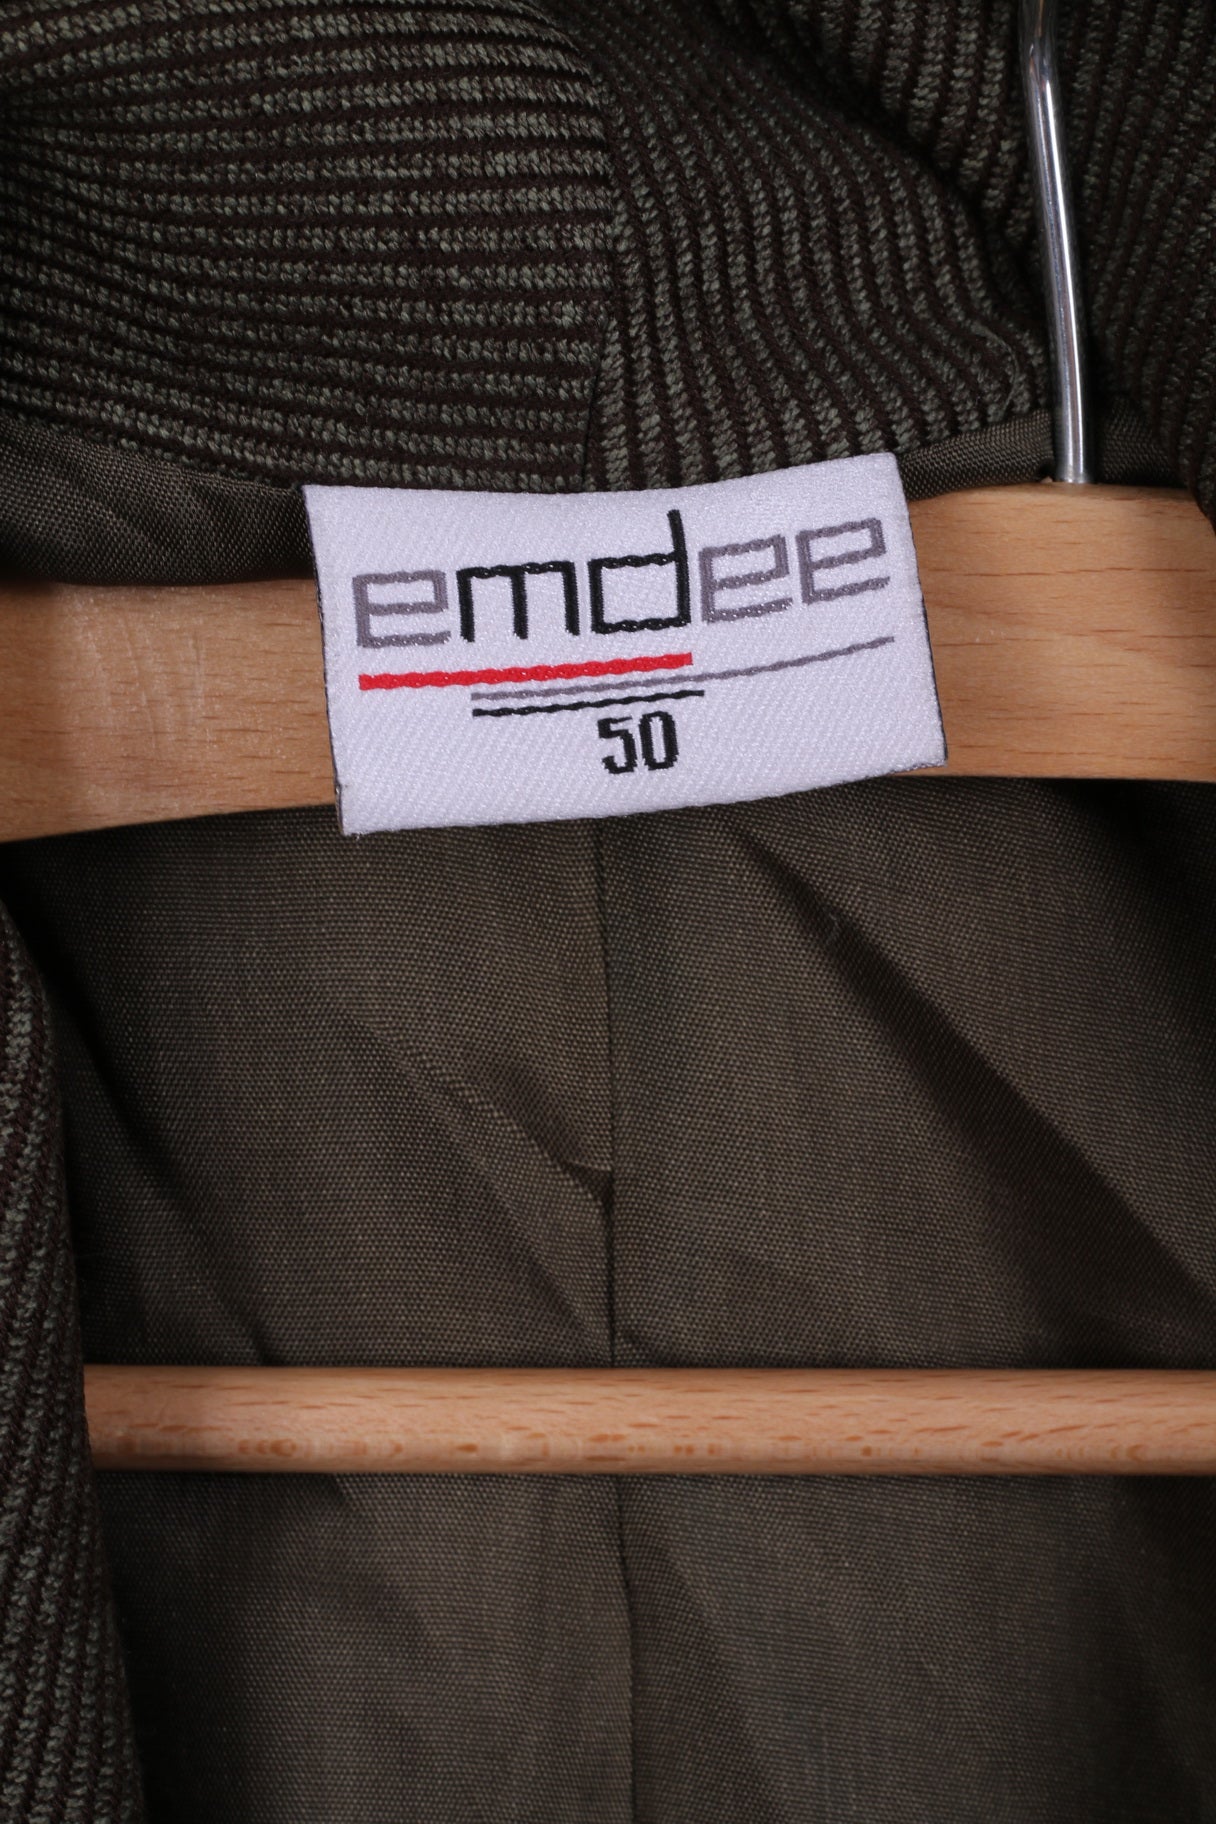 Emdee Women 24 50 Vest Brown Green Full Zipper Pocket Vintage Bodywarmer